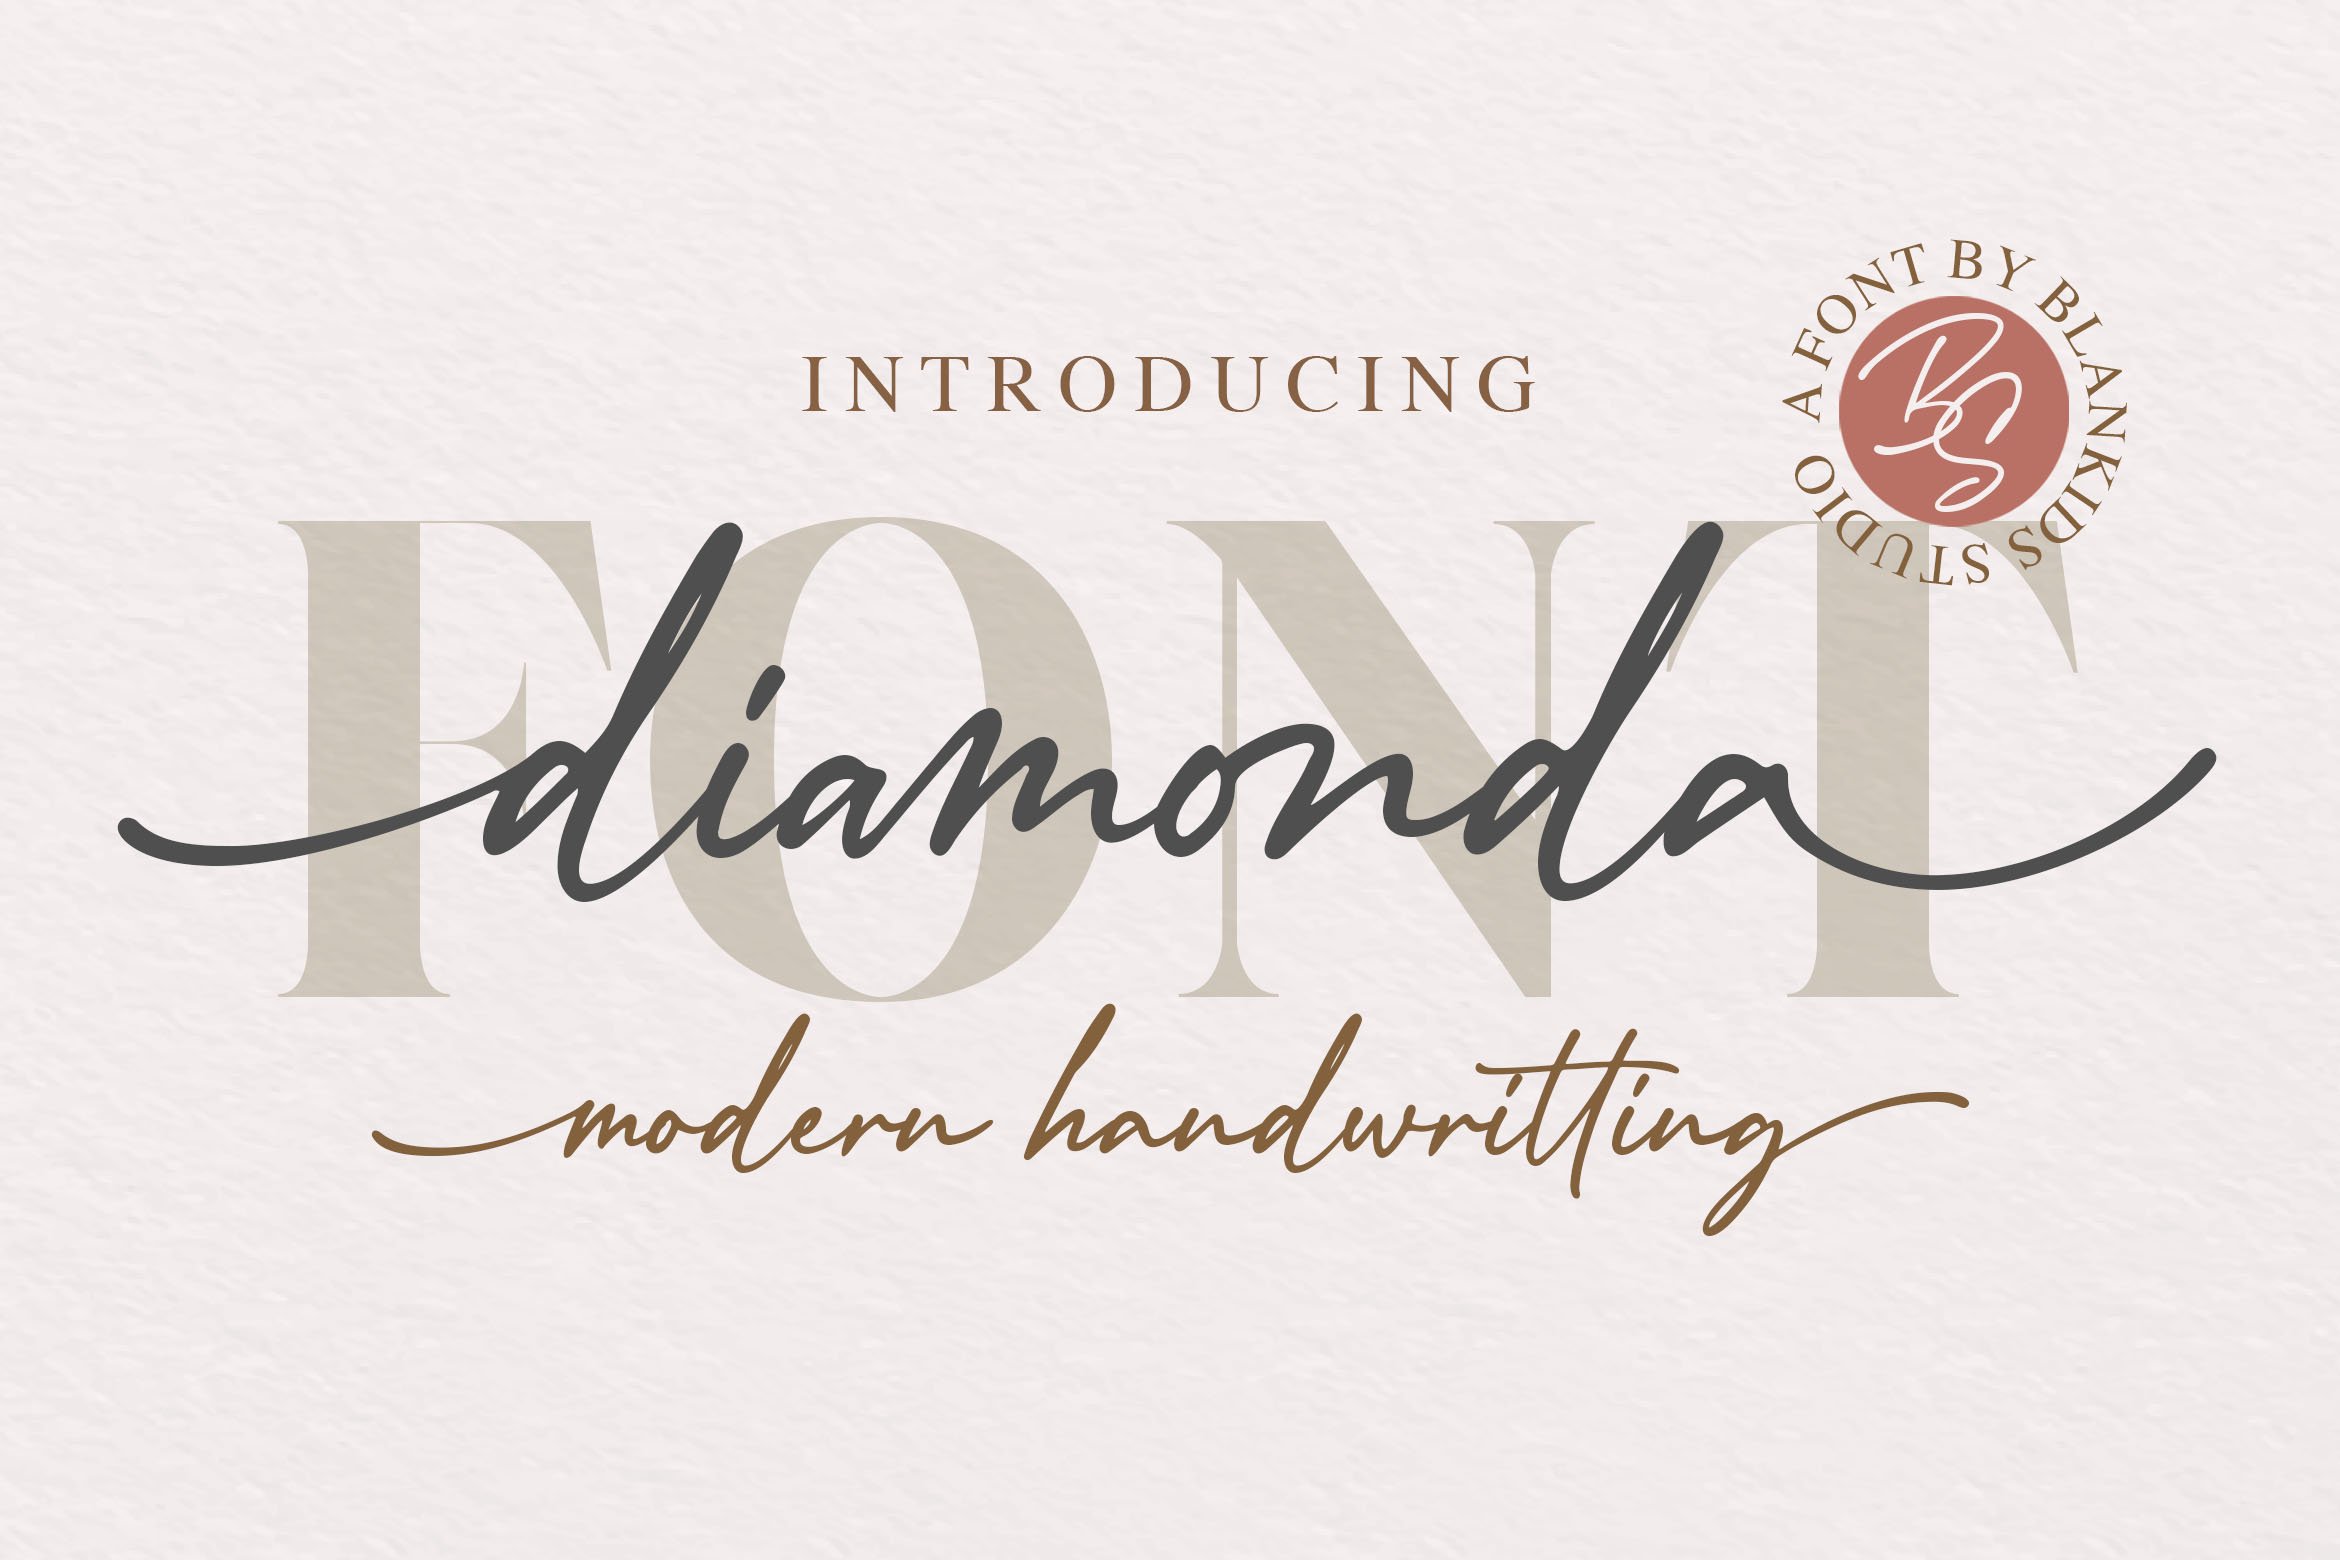 Diamonda - Modern Handwritting Font cover image.